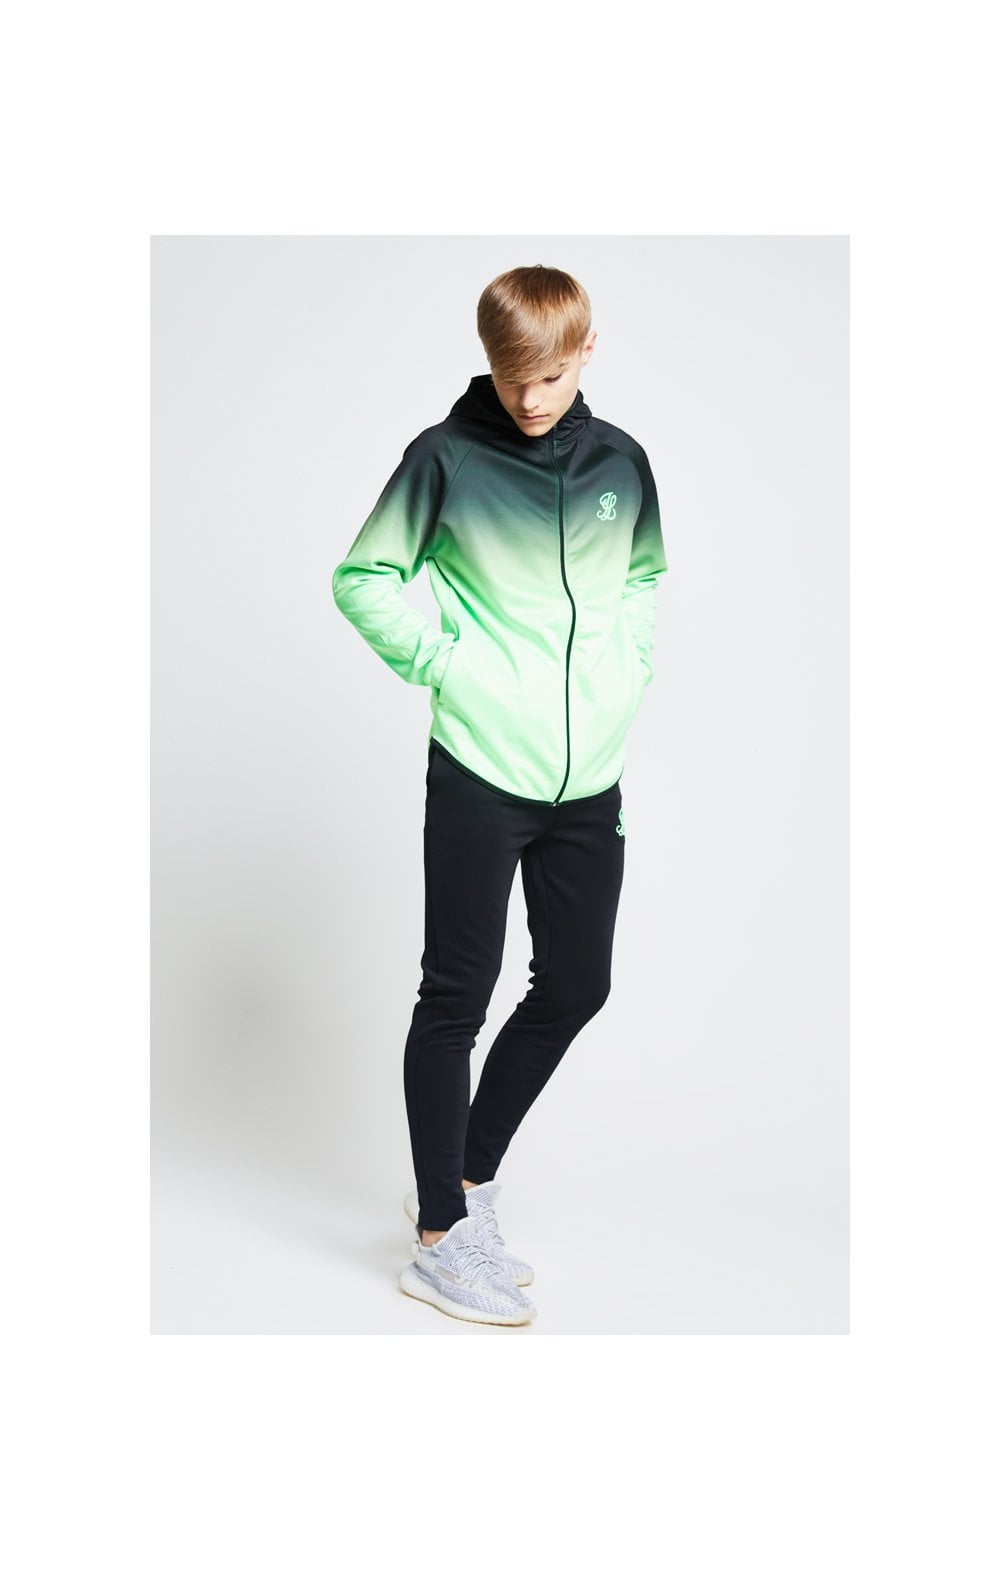 Illusive London Athlete Zip Through Hoodie - Black & Neon Green (3)